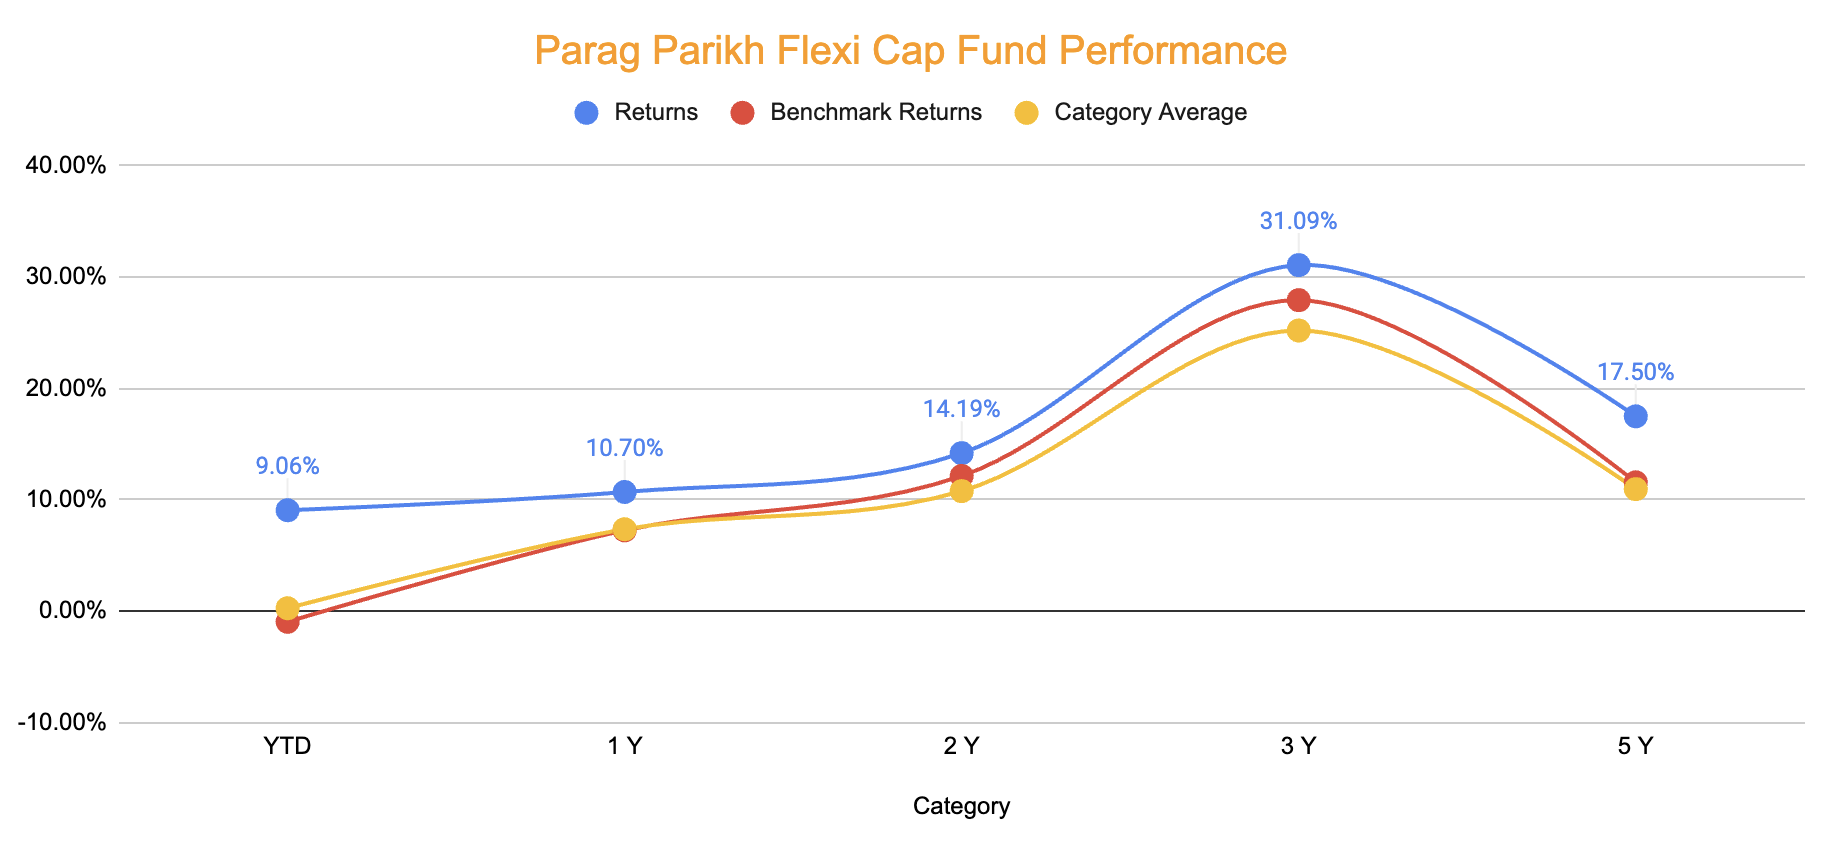 Parag-Parikh-Flexi-Cap-Fund-Performance